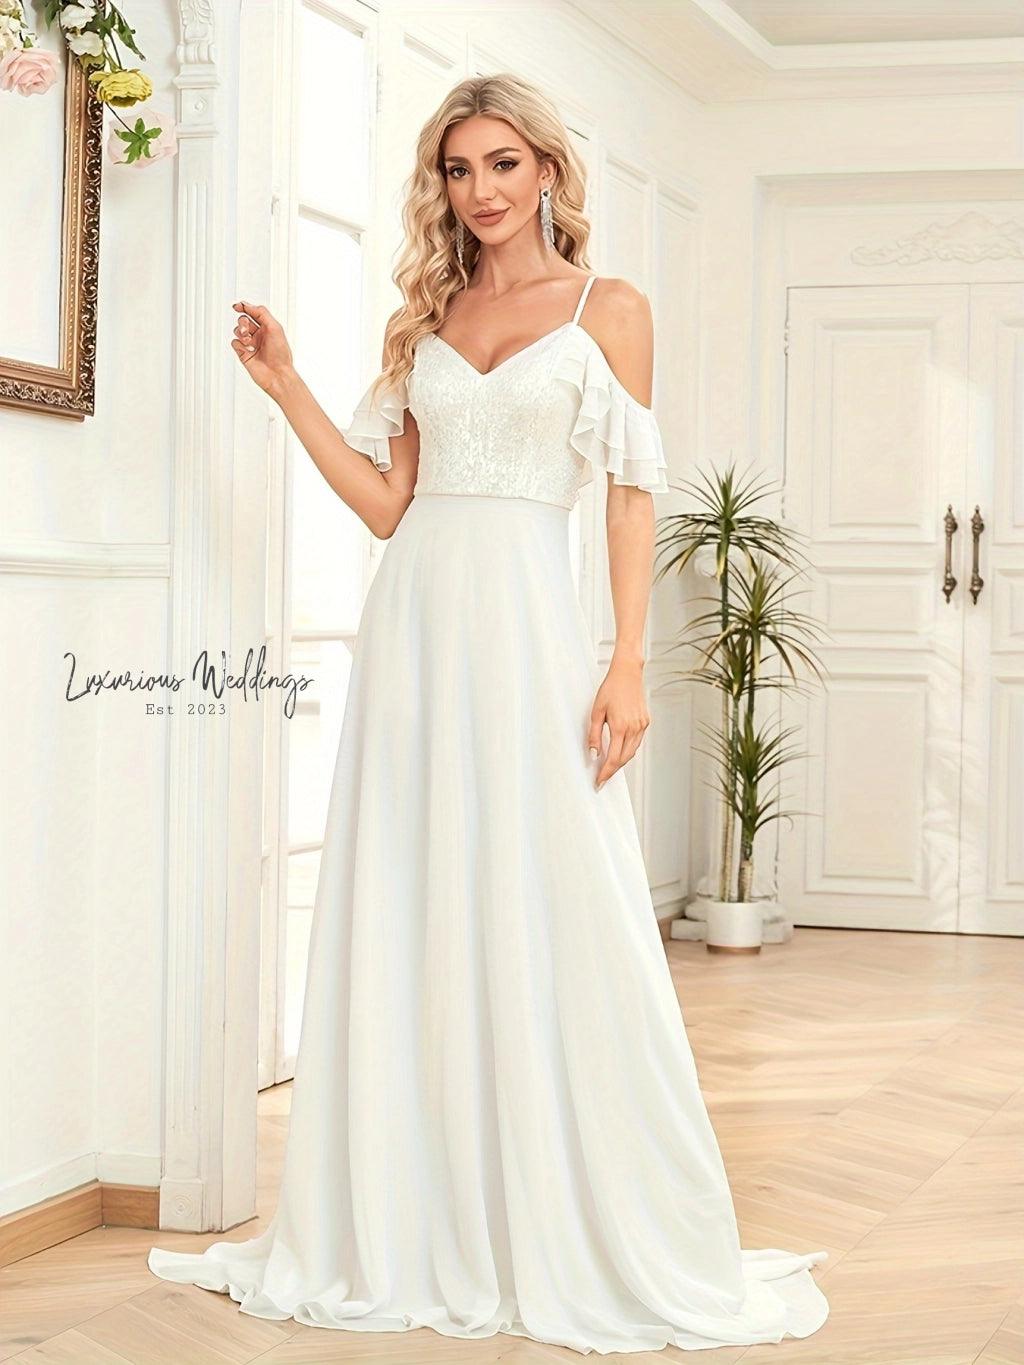 Stunning Sequin Wedding Dress - Elegant, Versatile, High-Quality - Luxurious Weddings